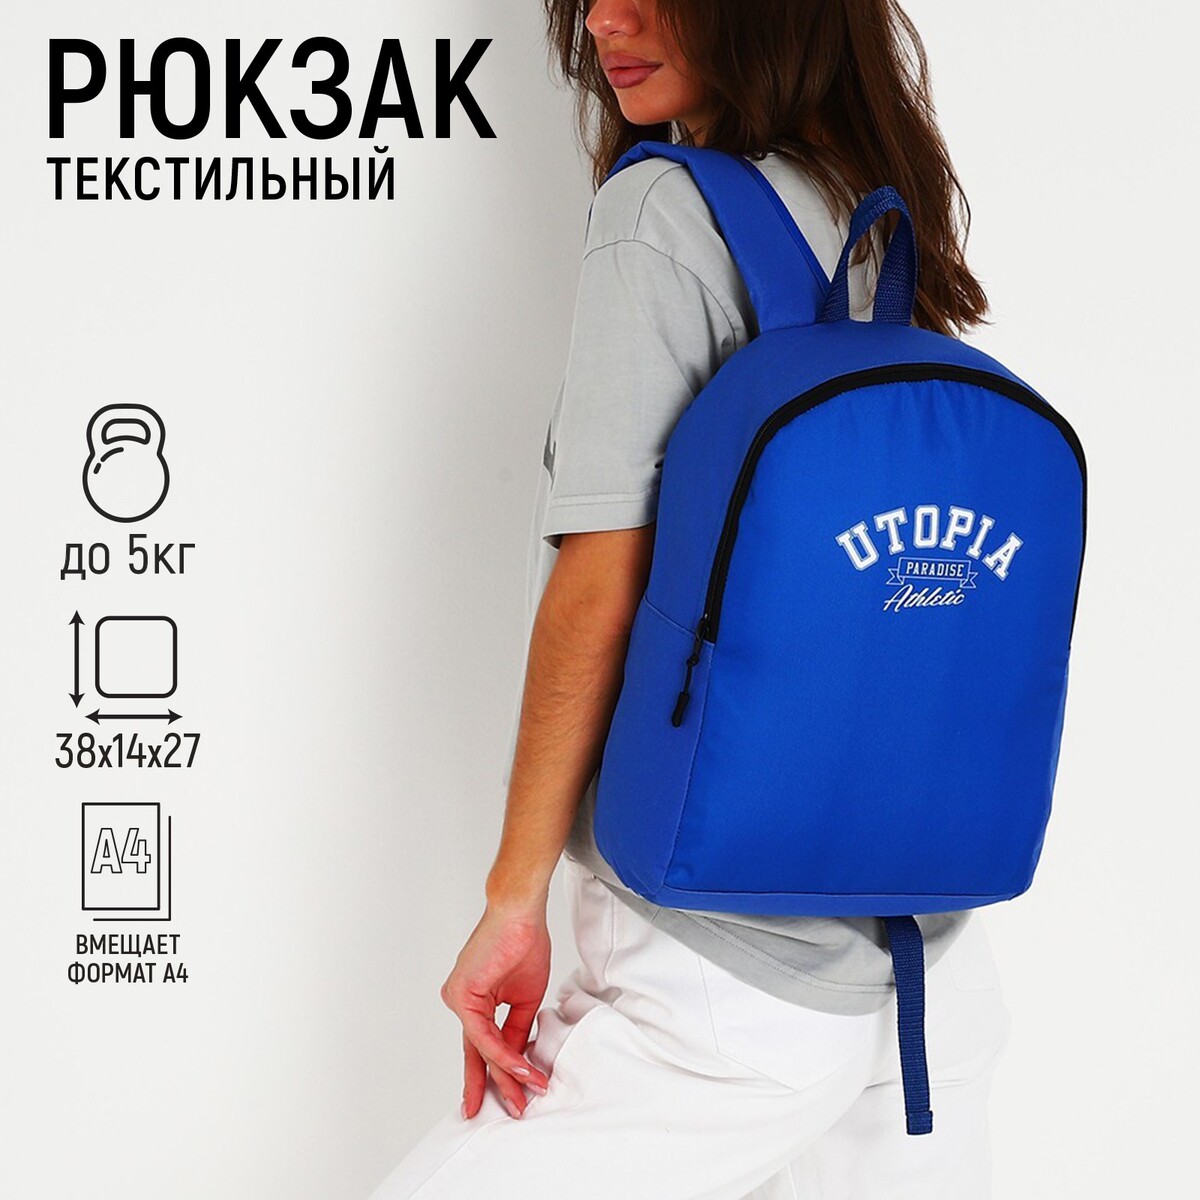 Рюкзак текстильный utopia, 38х14х27 см, цвет синий